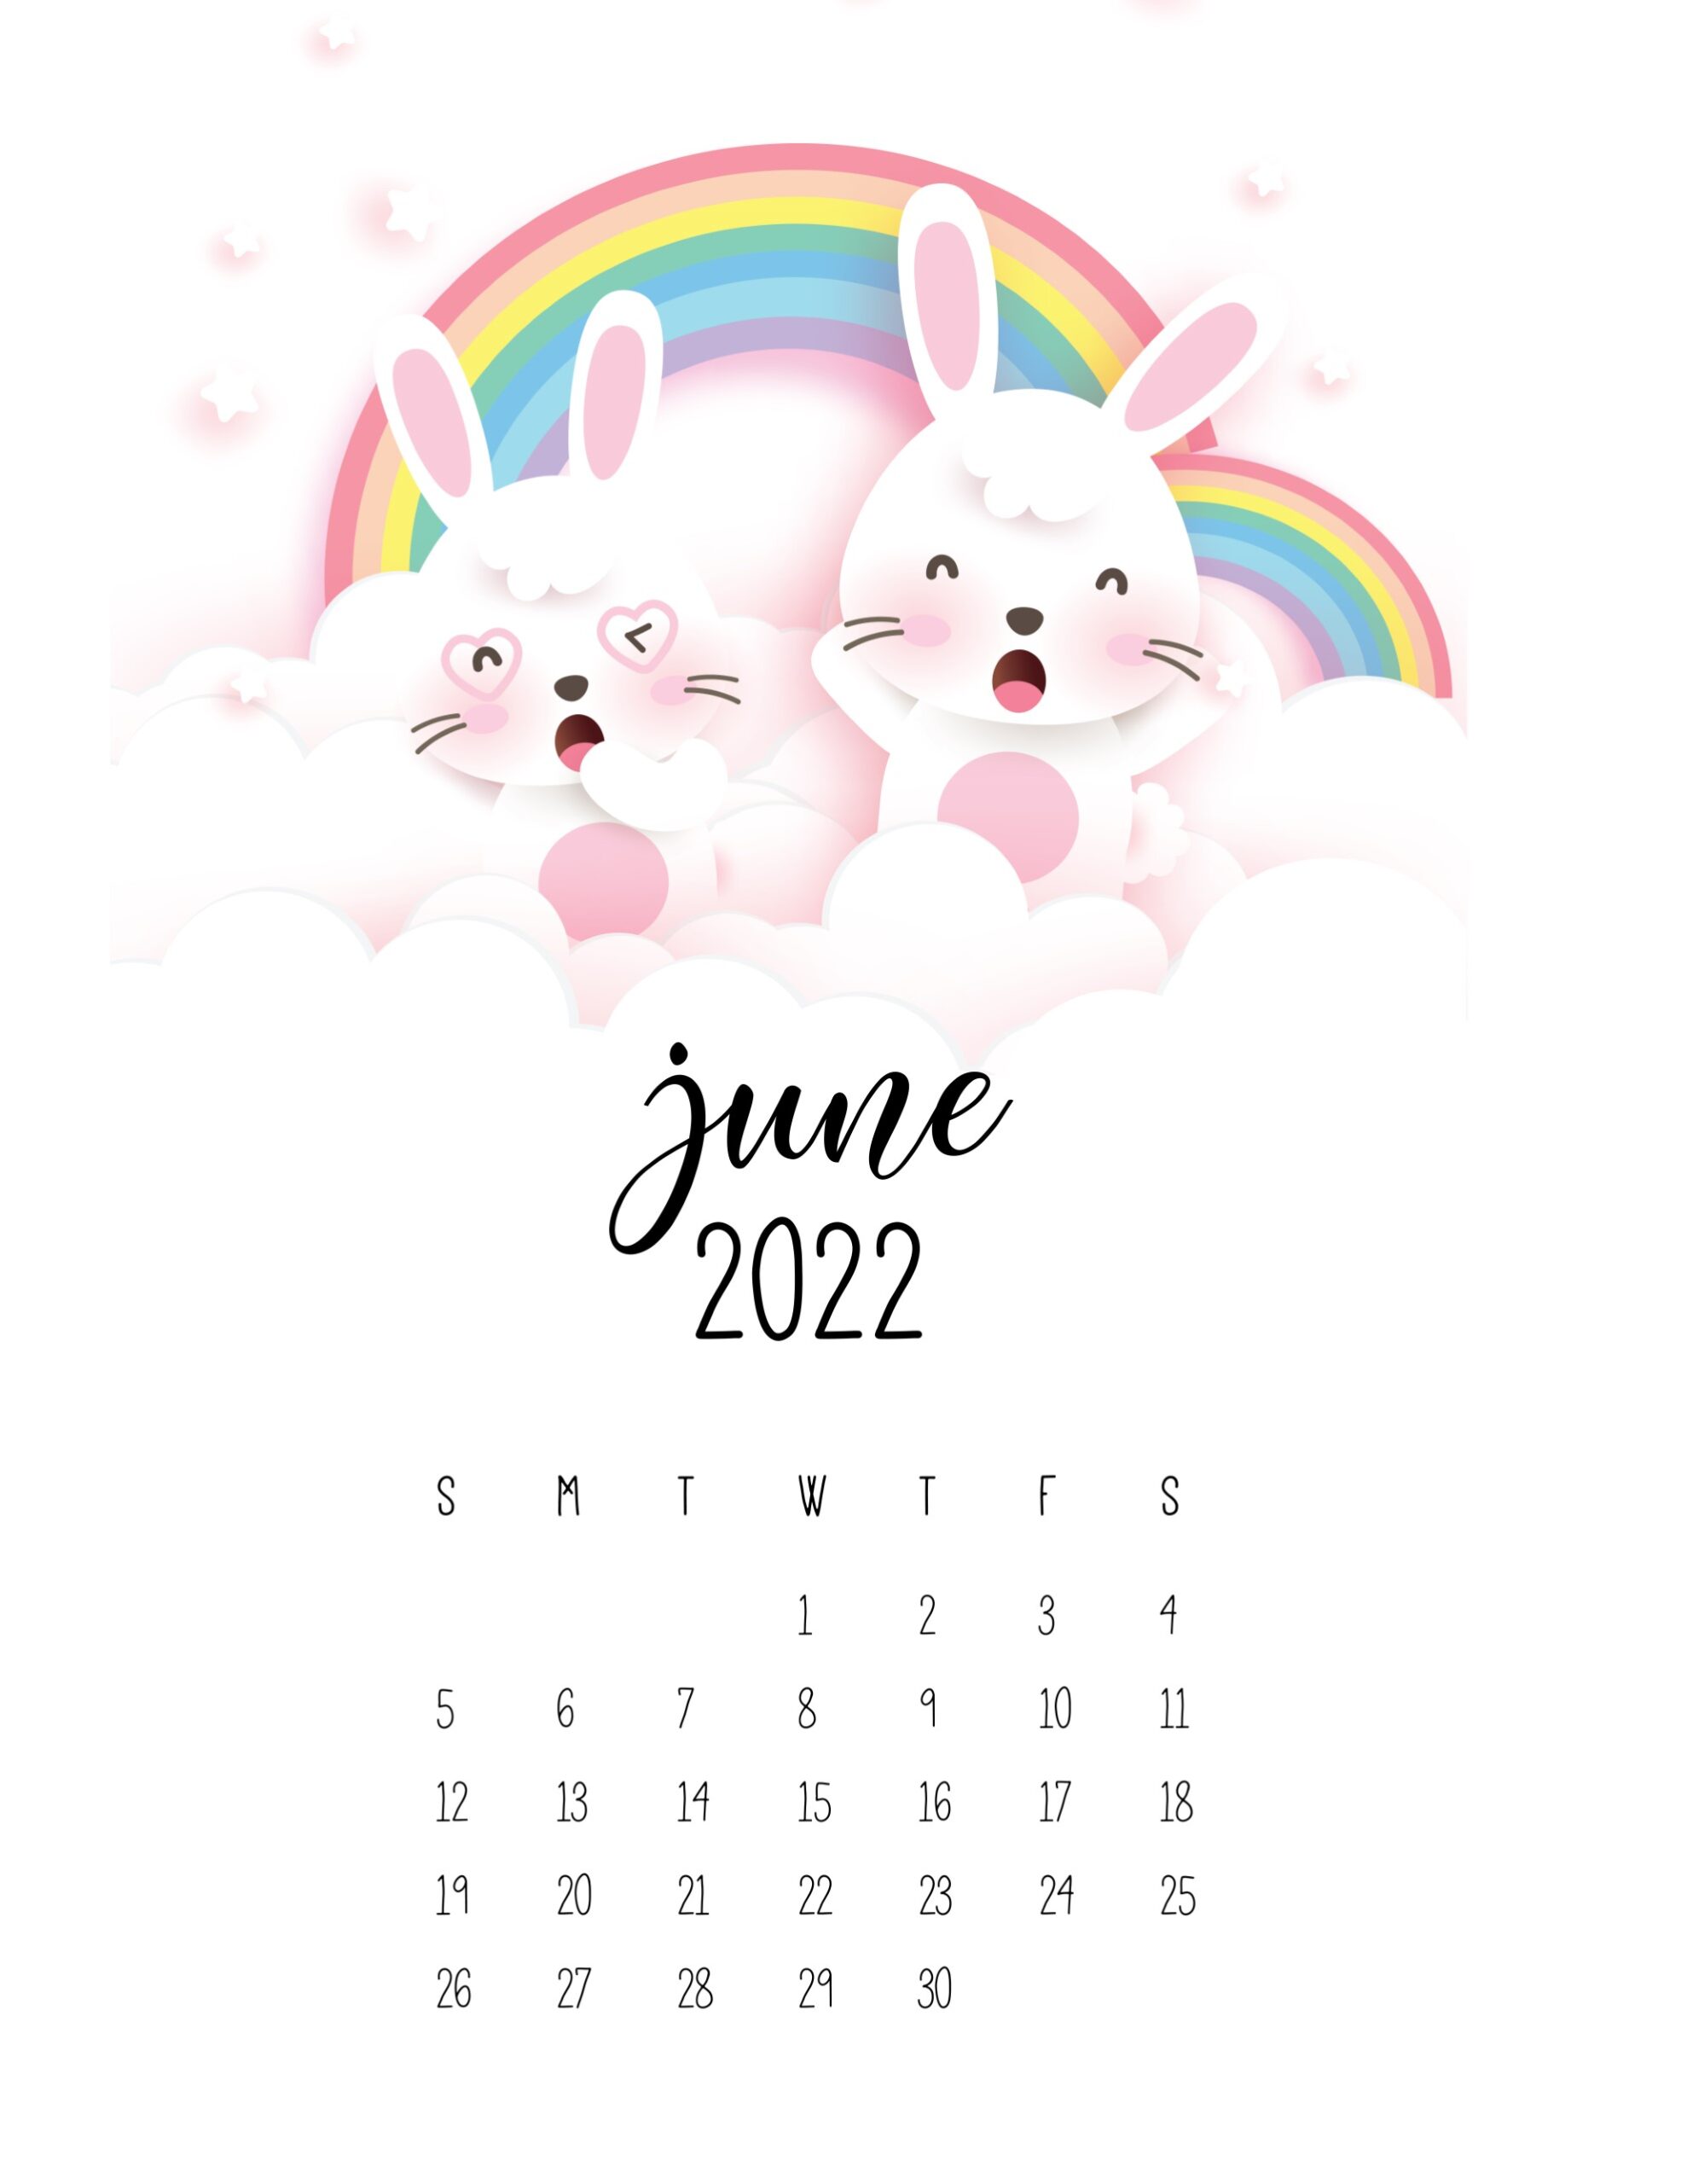 calendario 2022 coelhino junho